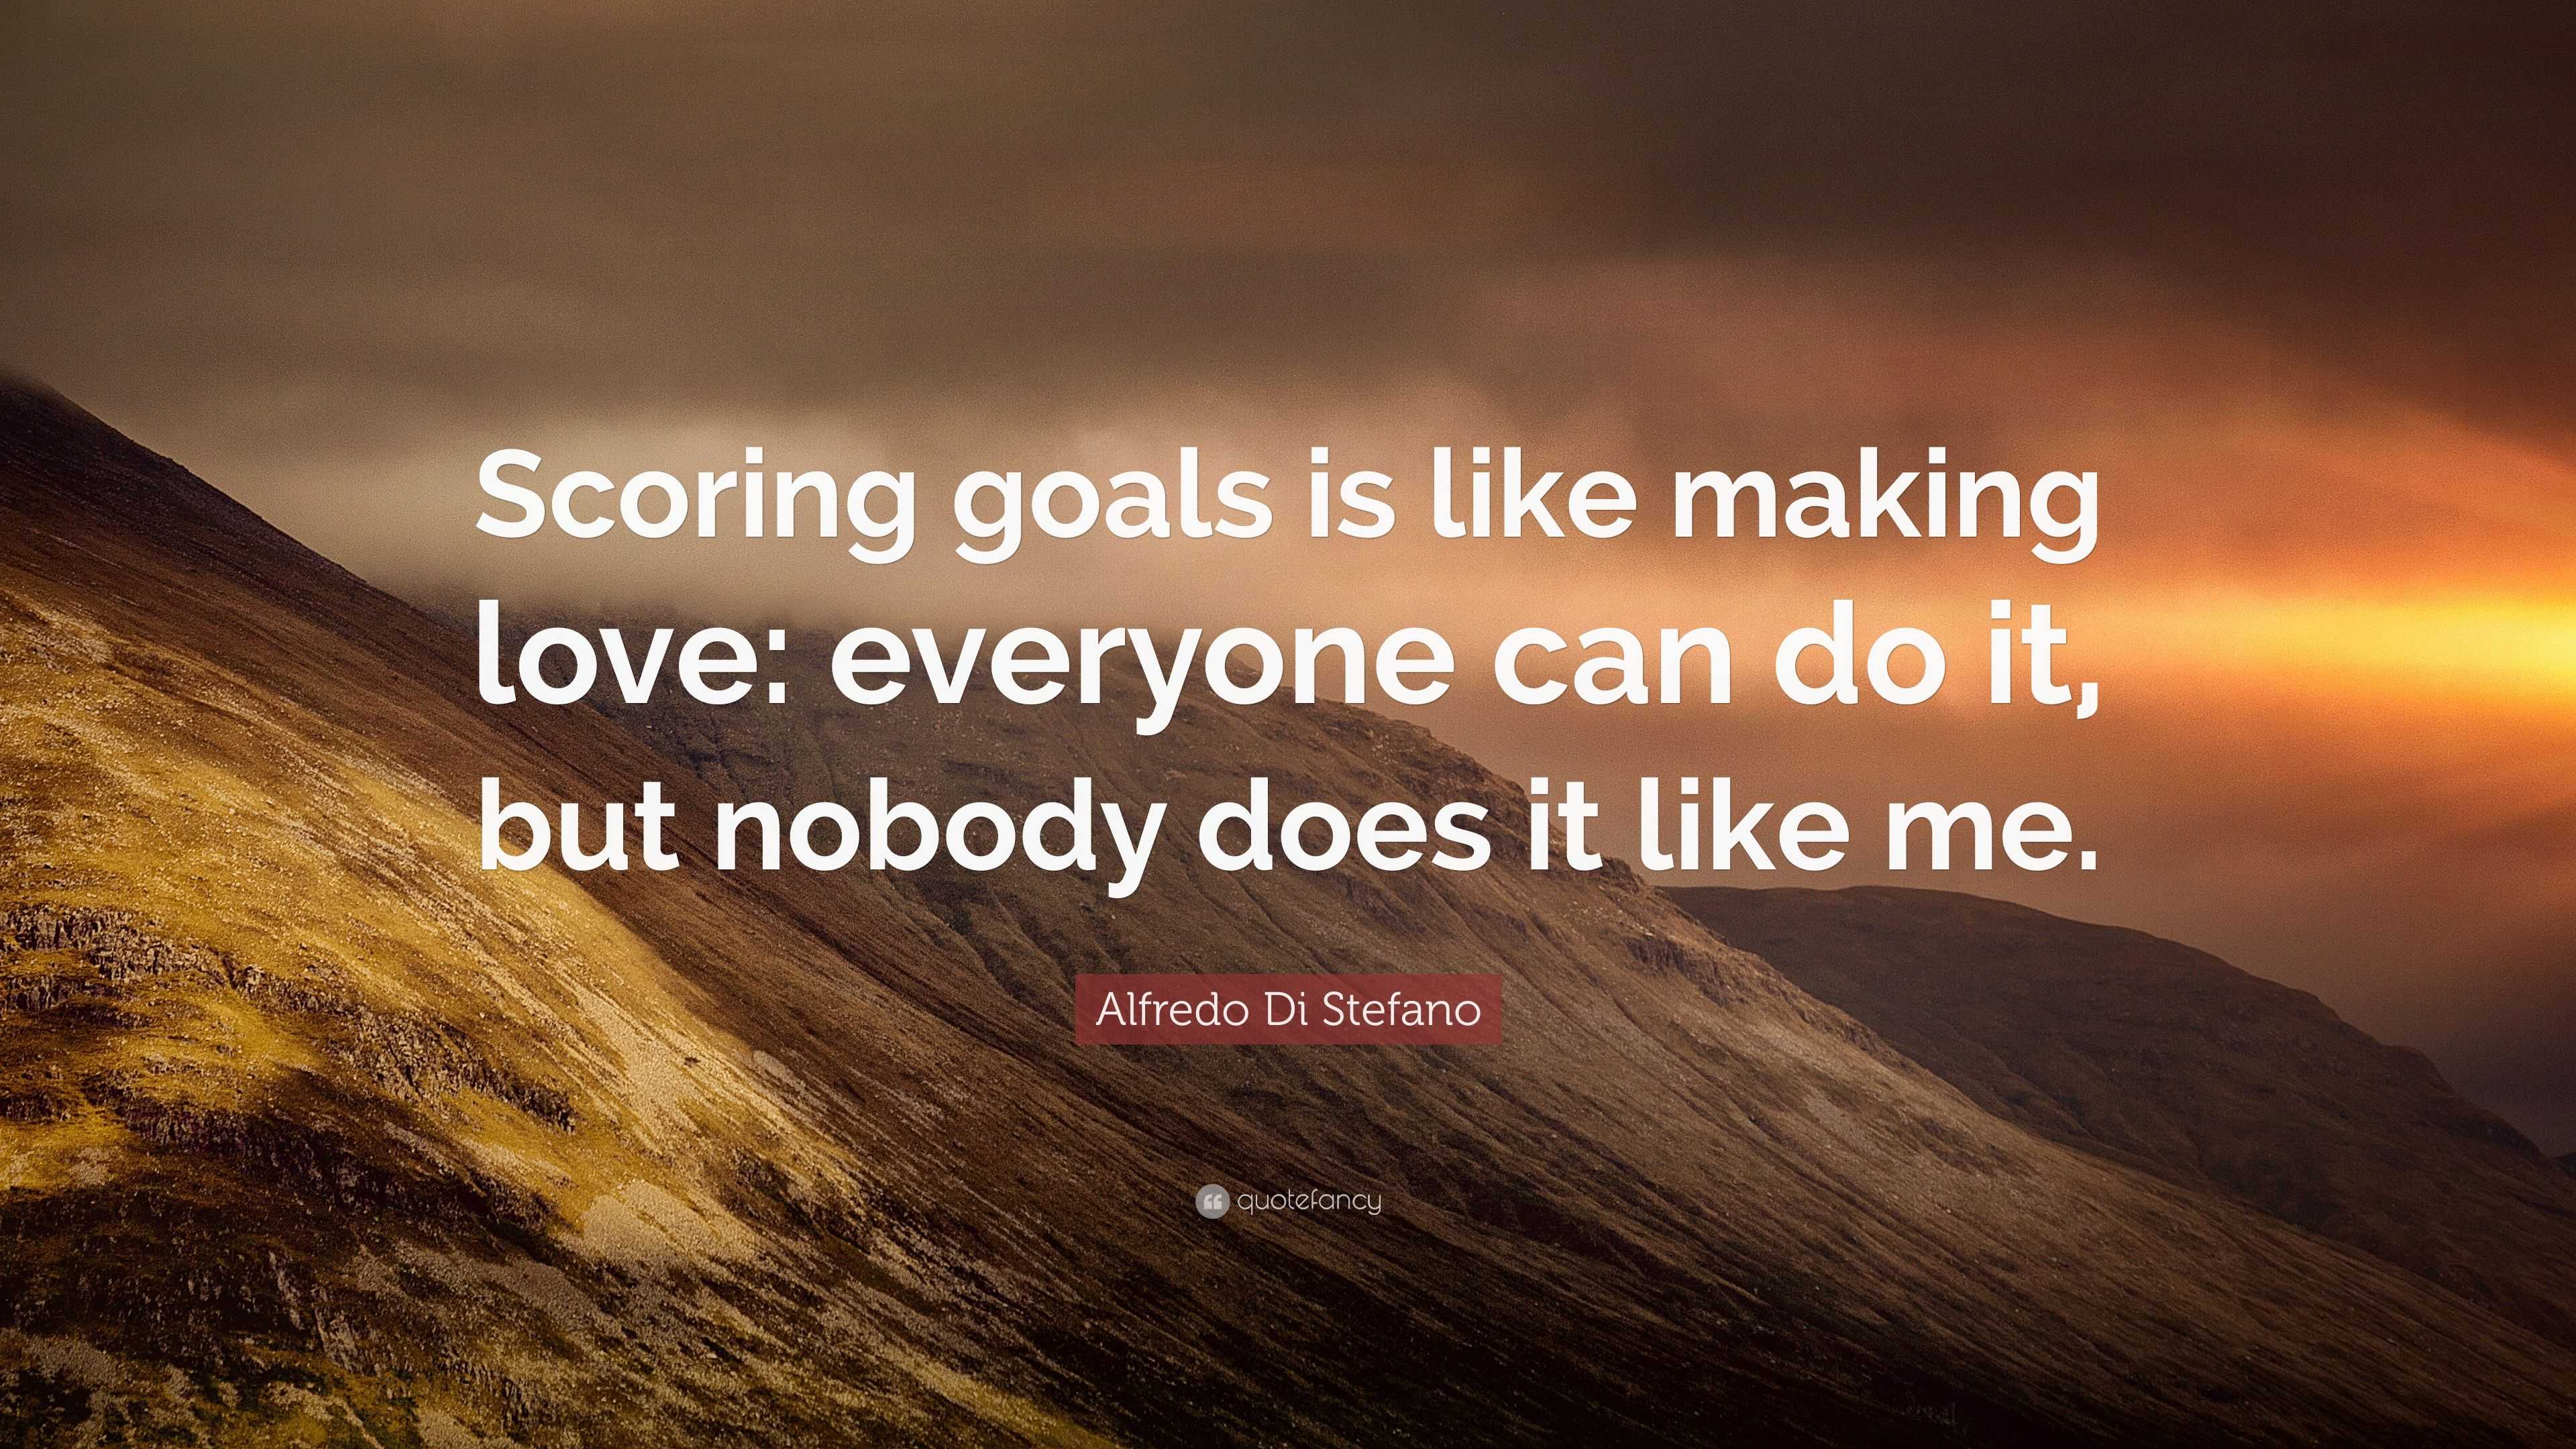 Alfredo Di Stefano Quote “Scoring goals is like making love everyone can do